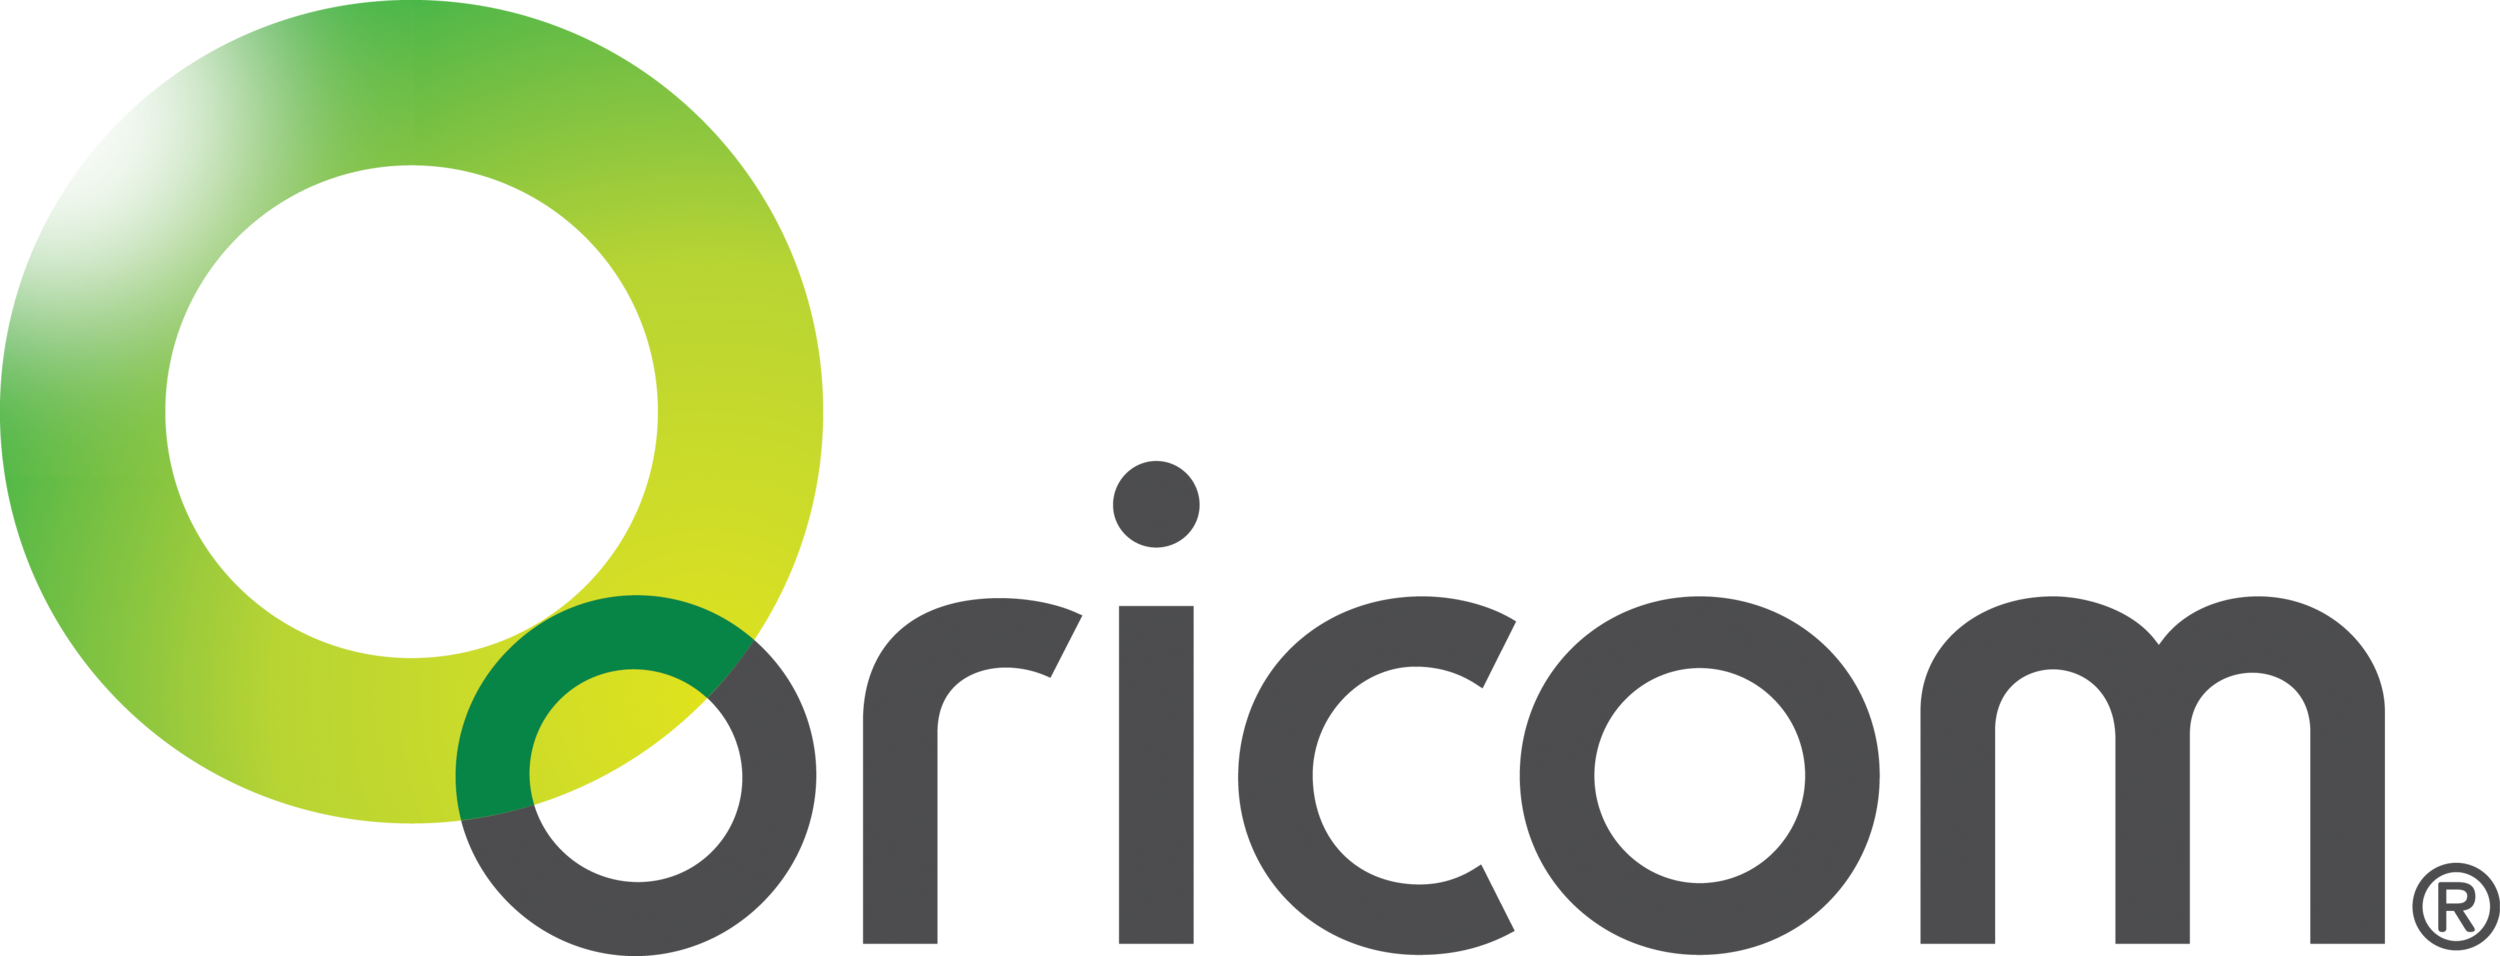 Oricom Logo vector.png